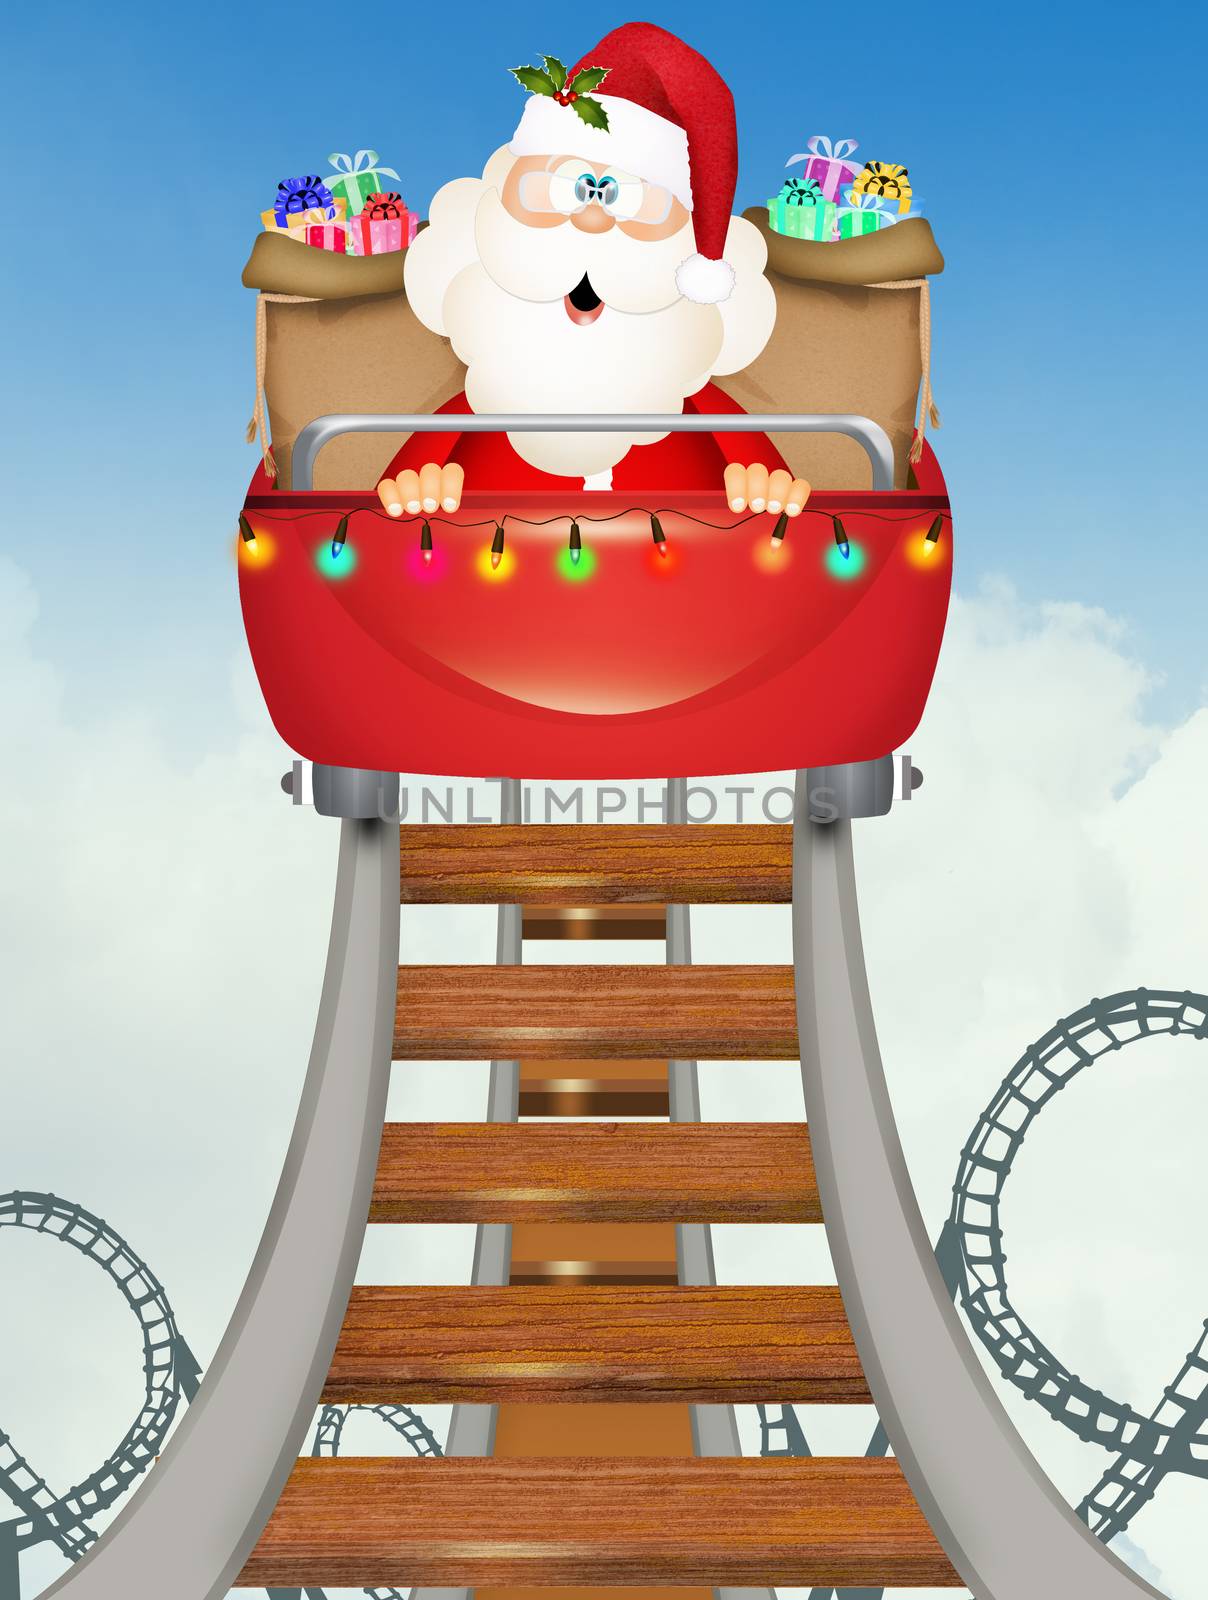 illustration of Santa Claus on roller coaster